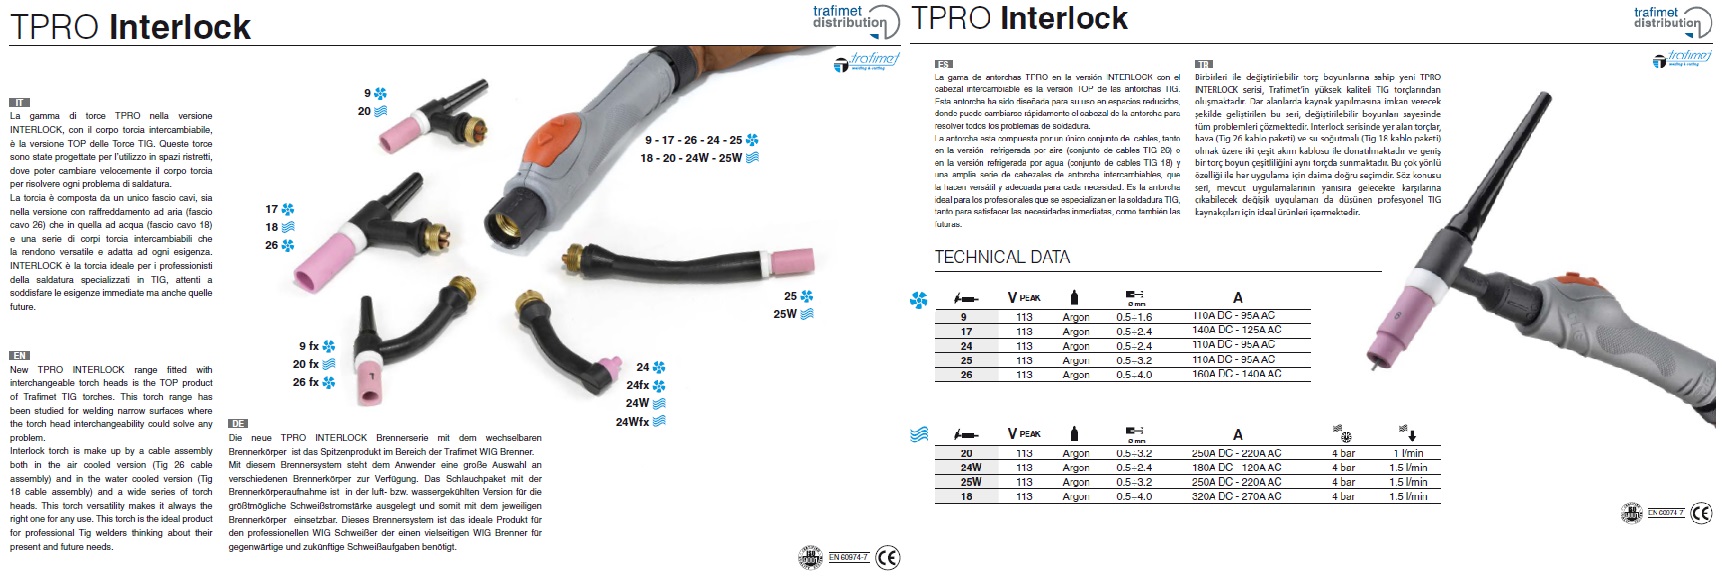 TPRO Interlock